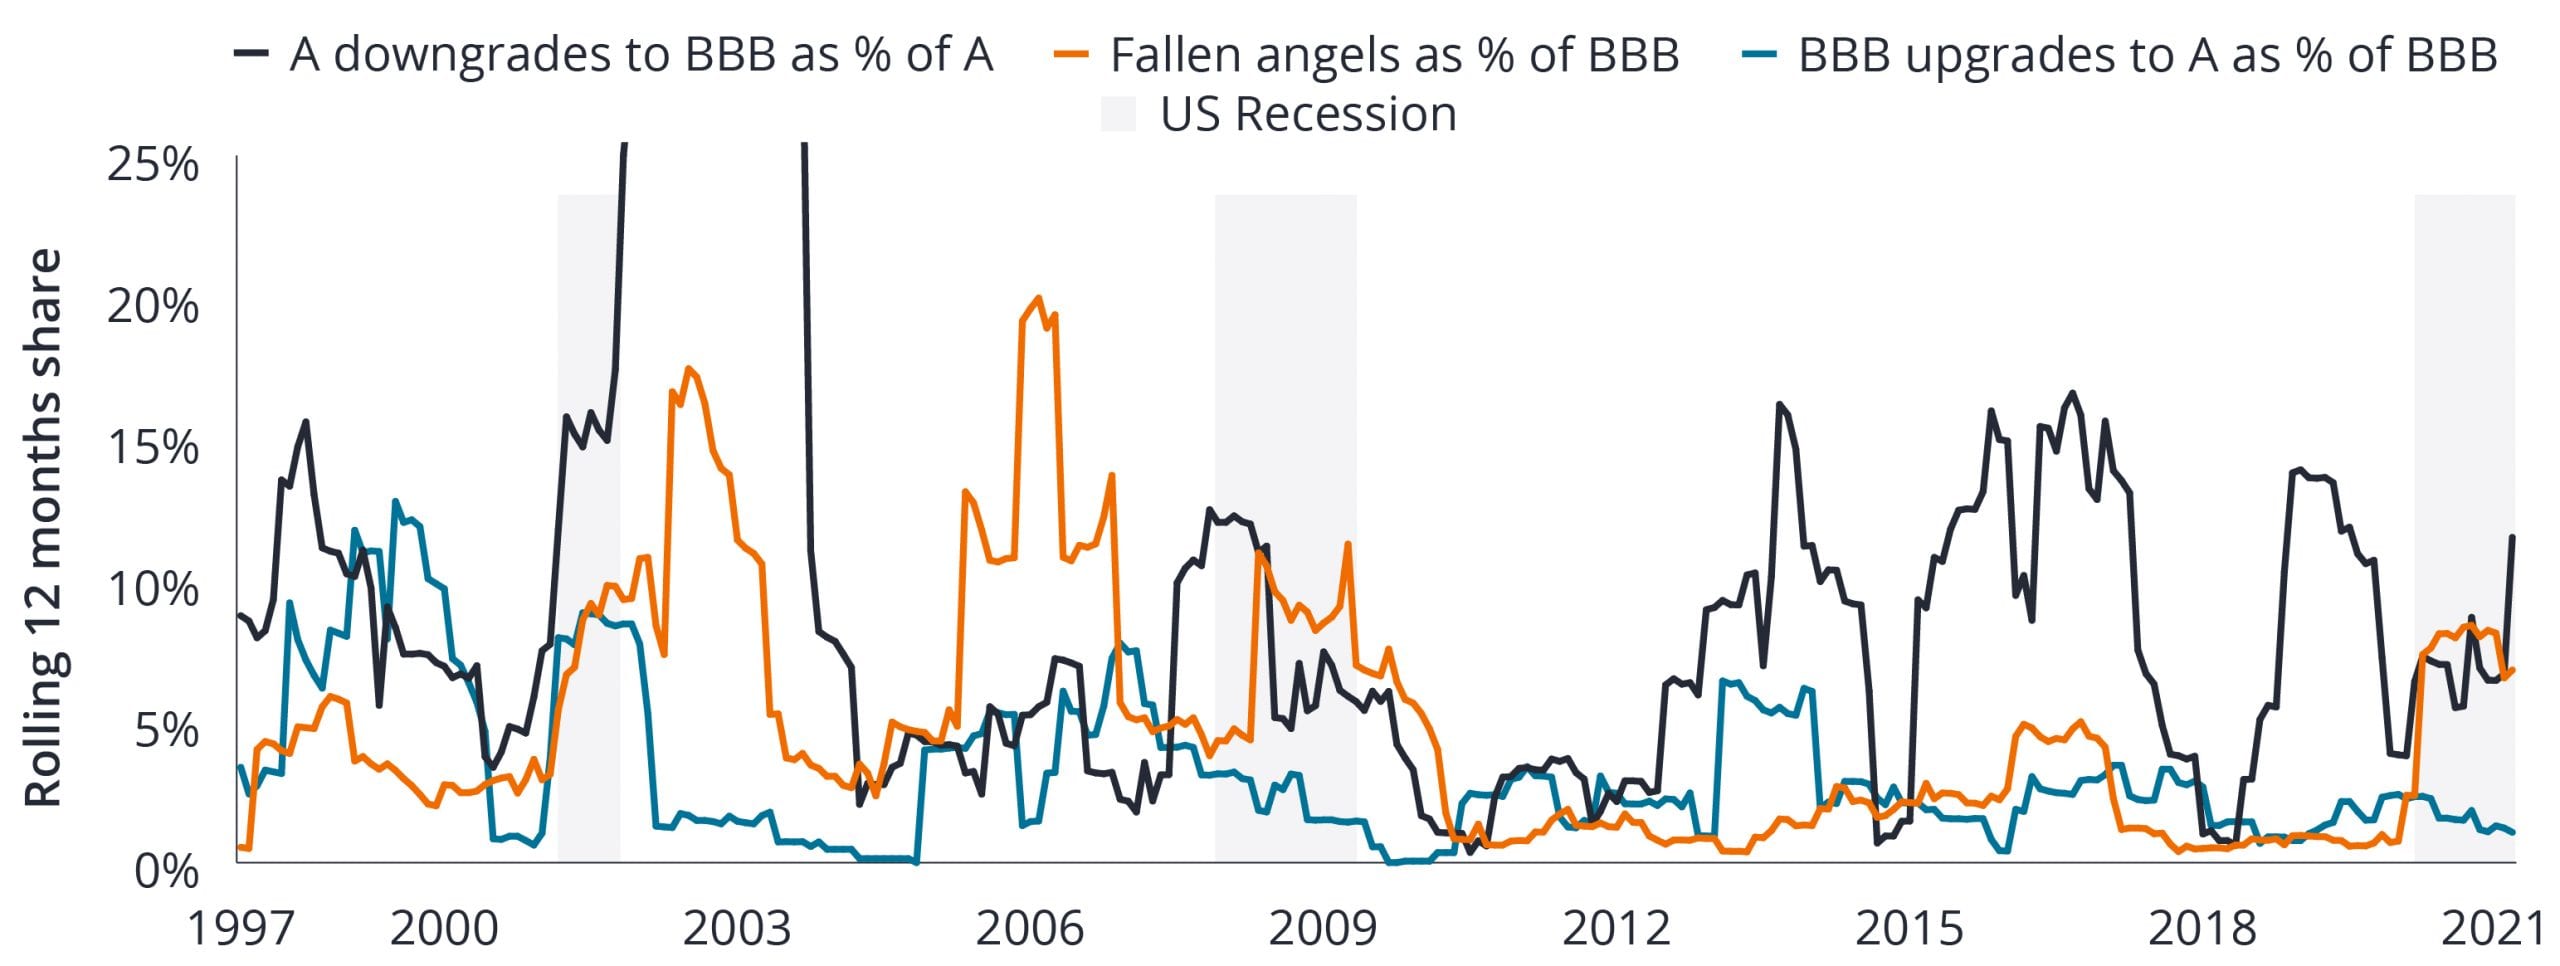 US industrials: fallen angels tend to be clustered around economic shocks